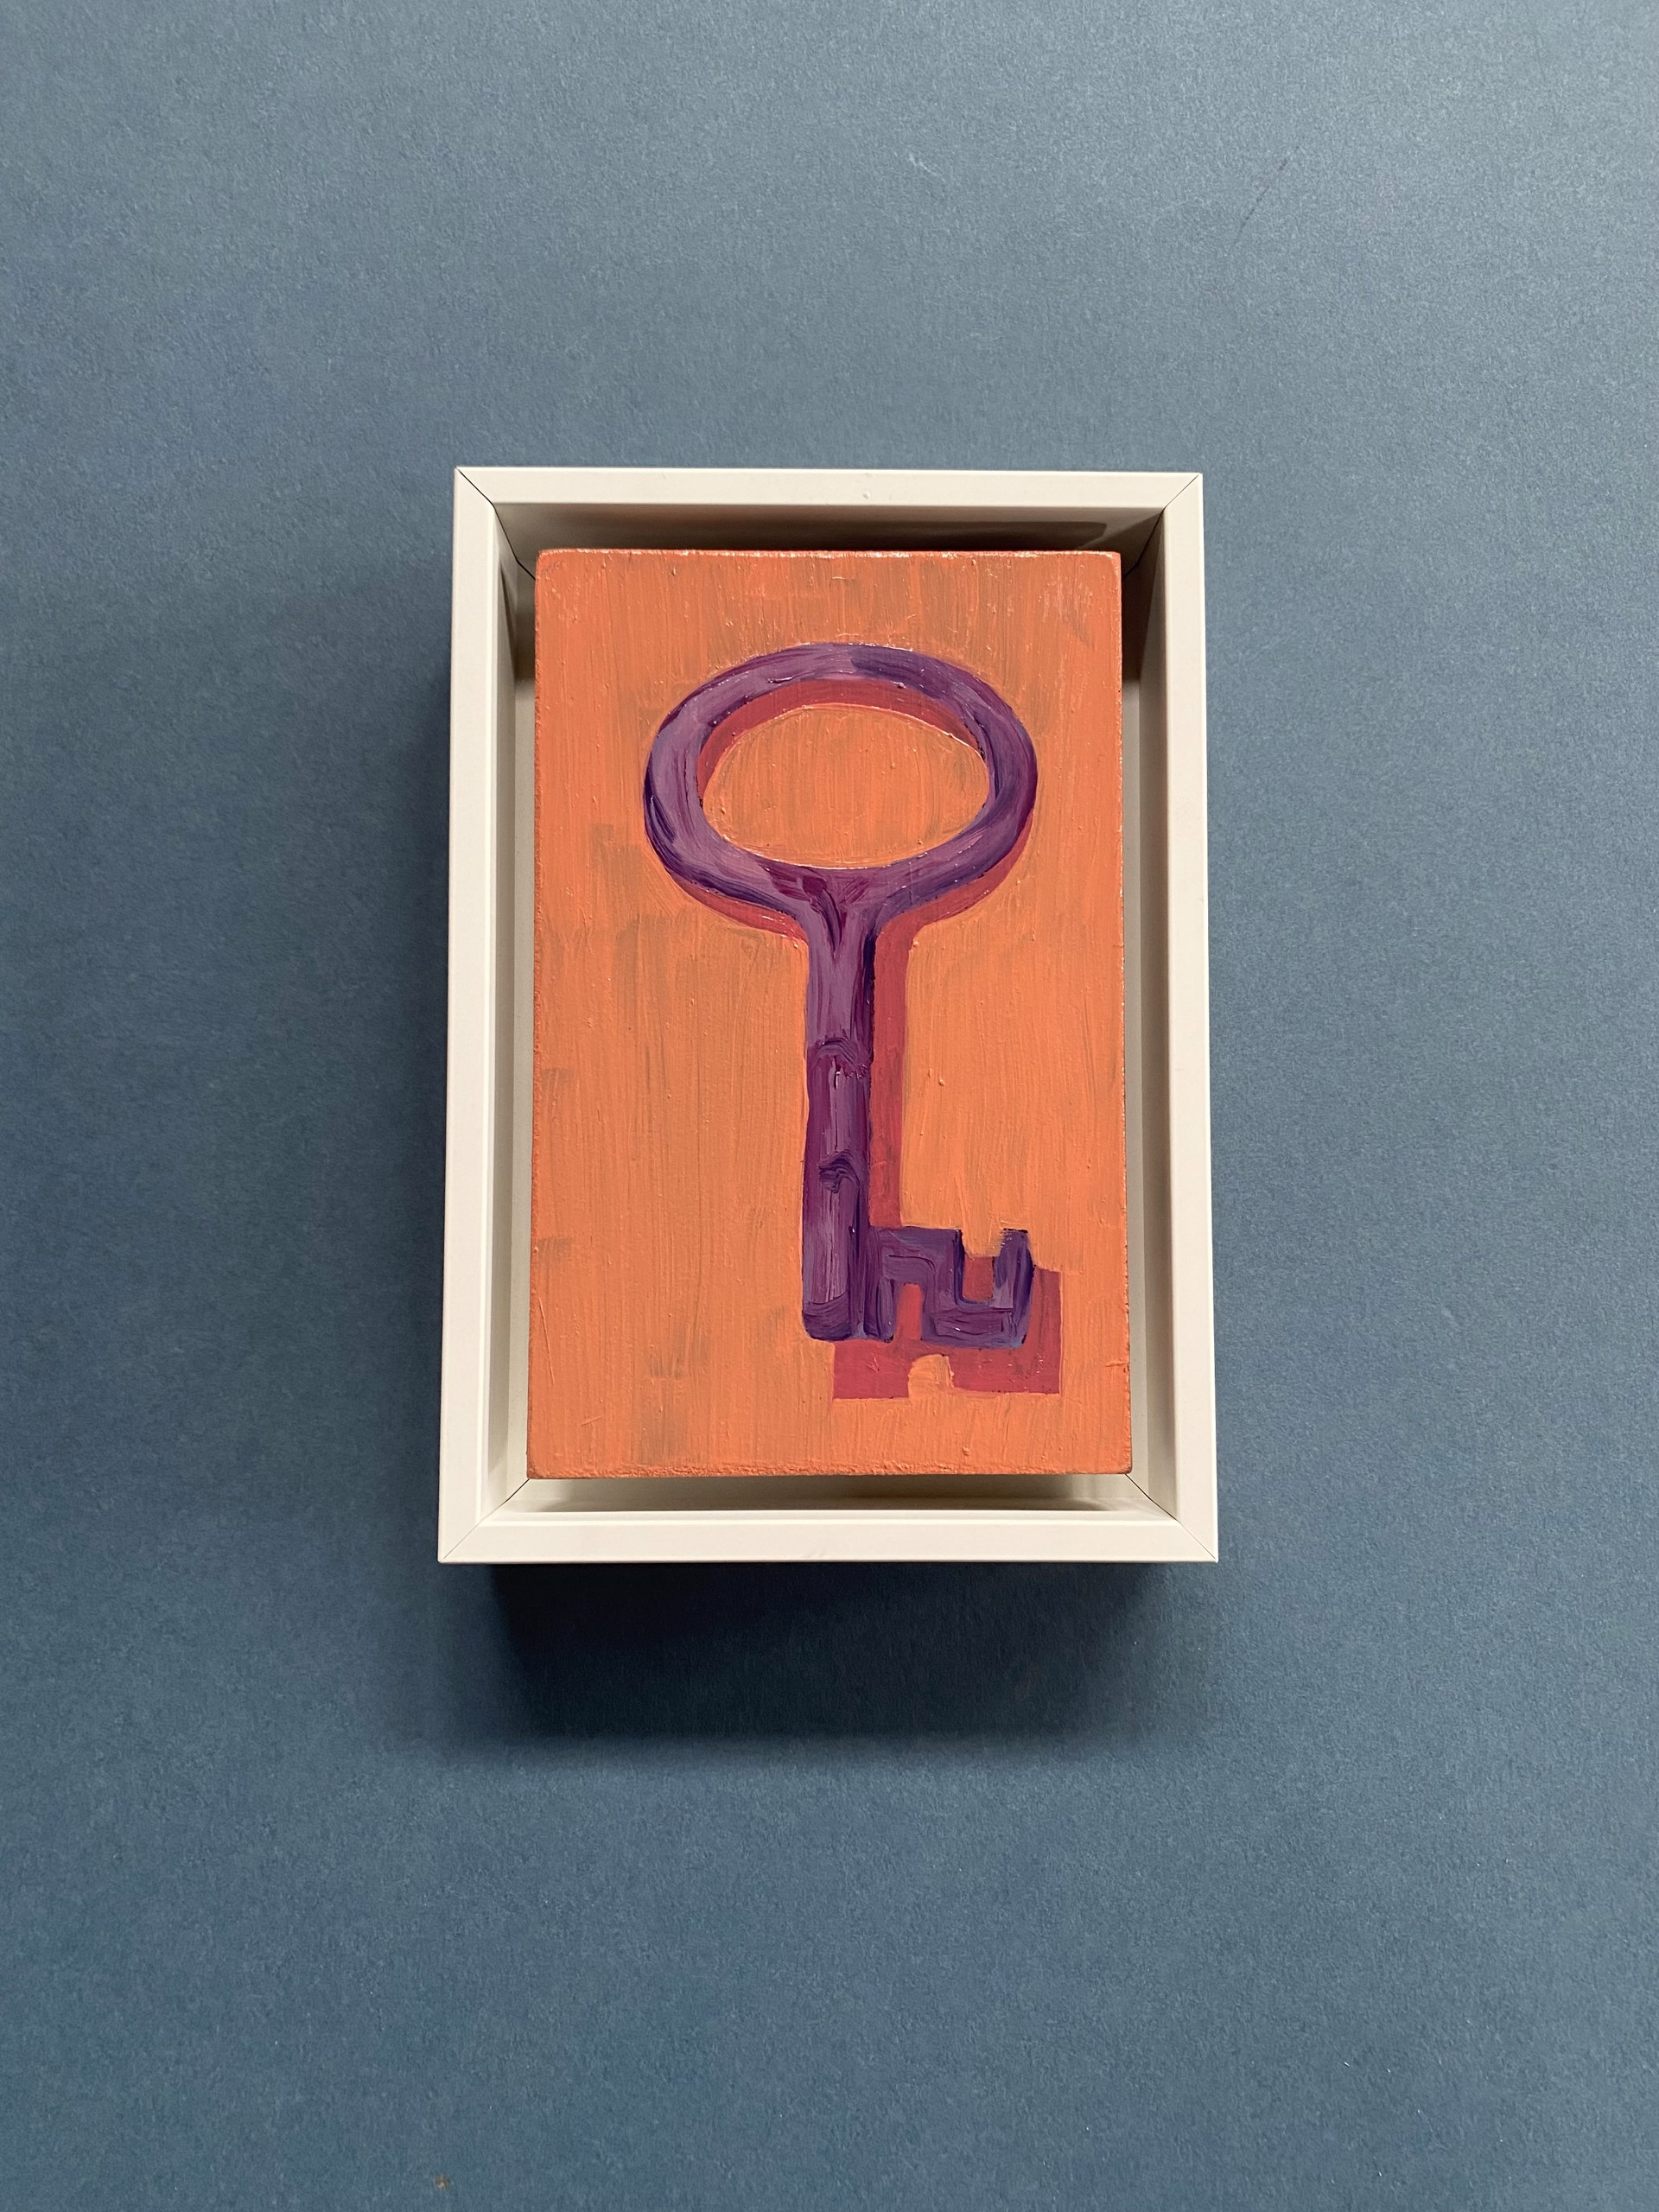 Key No. 42 by Stephen Wells